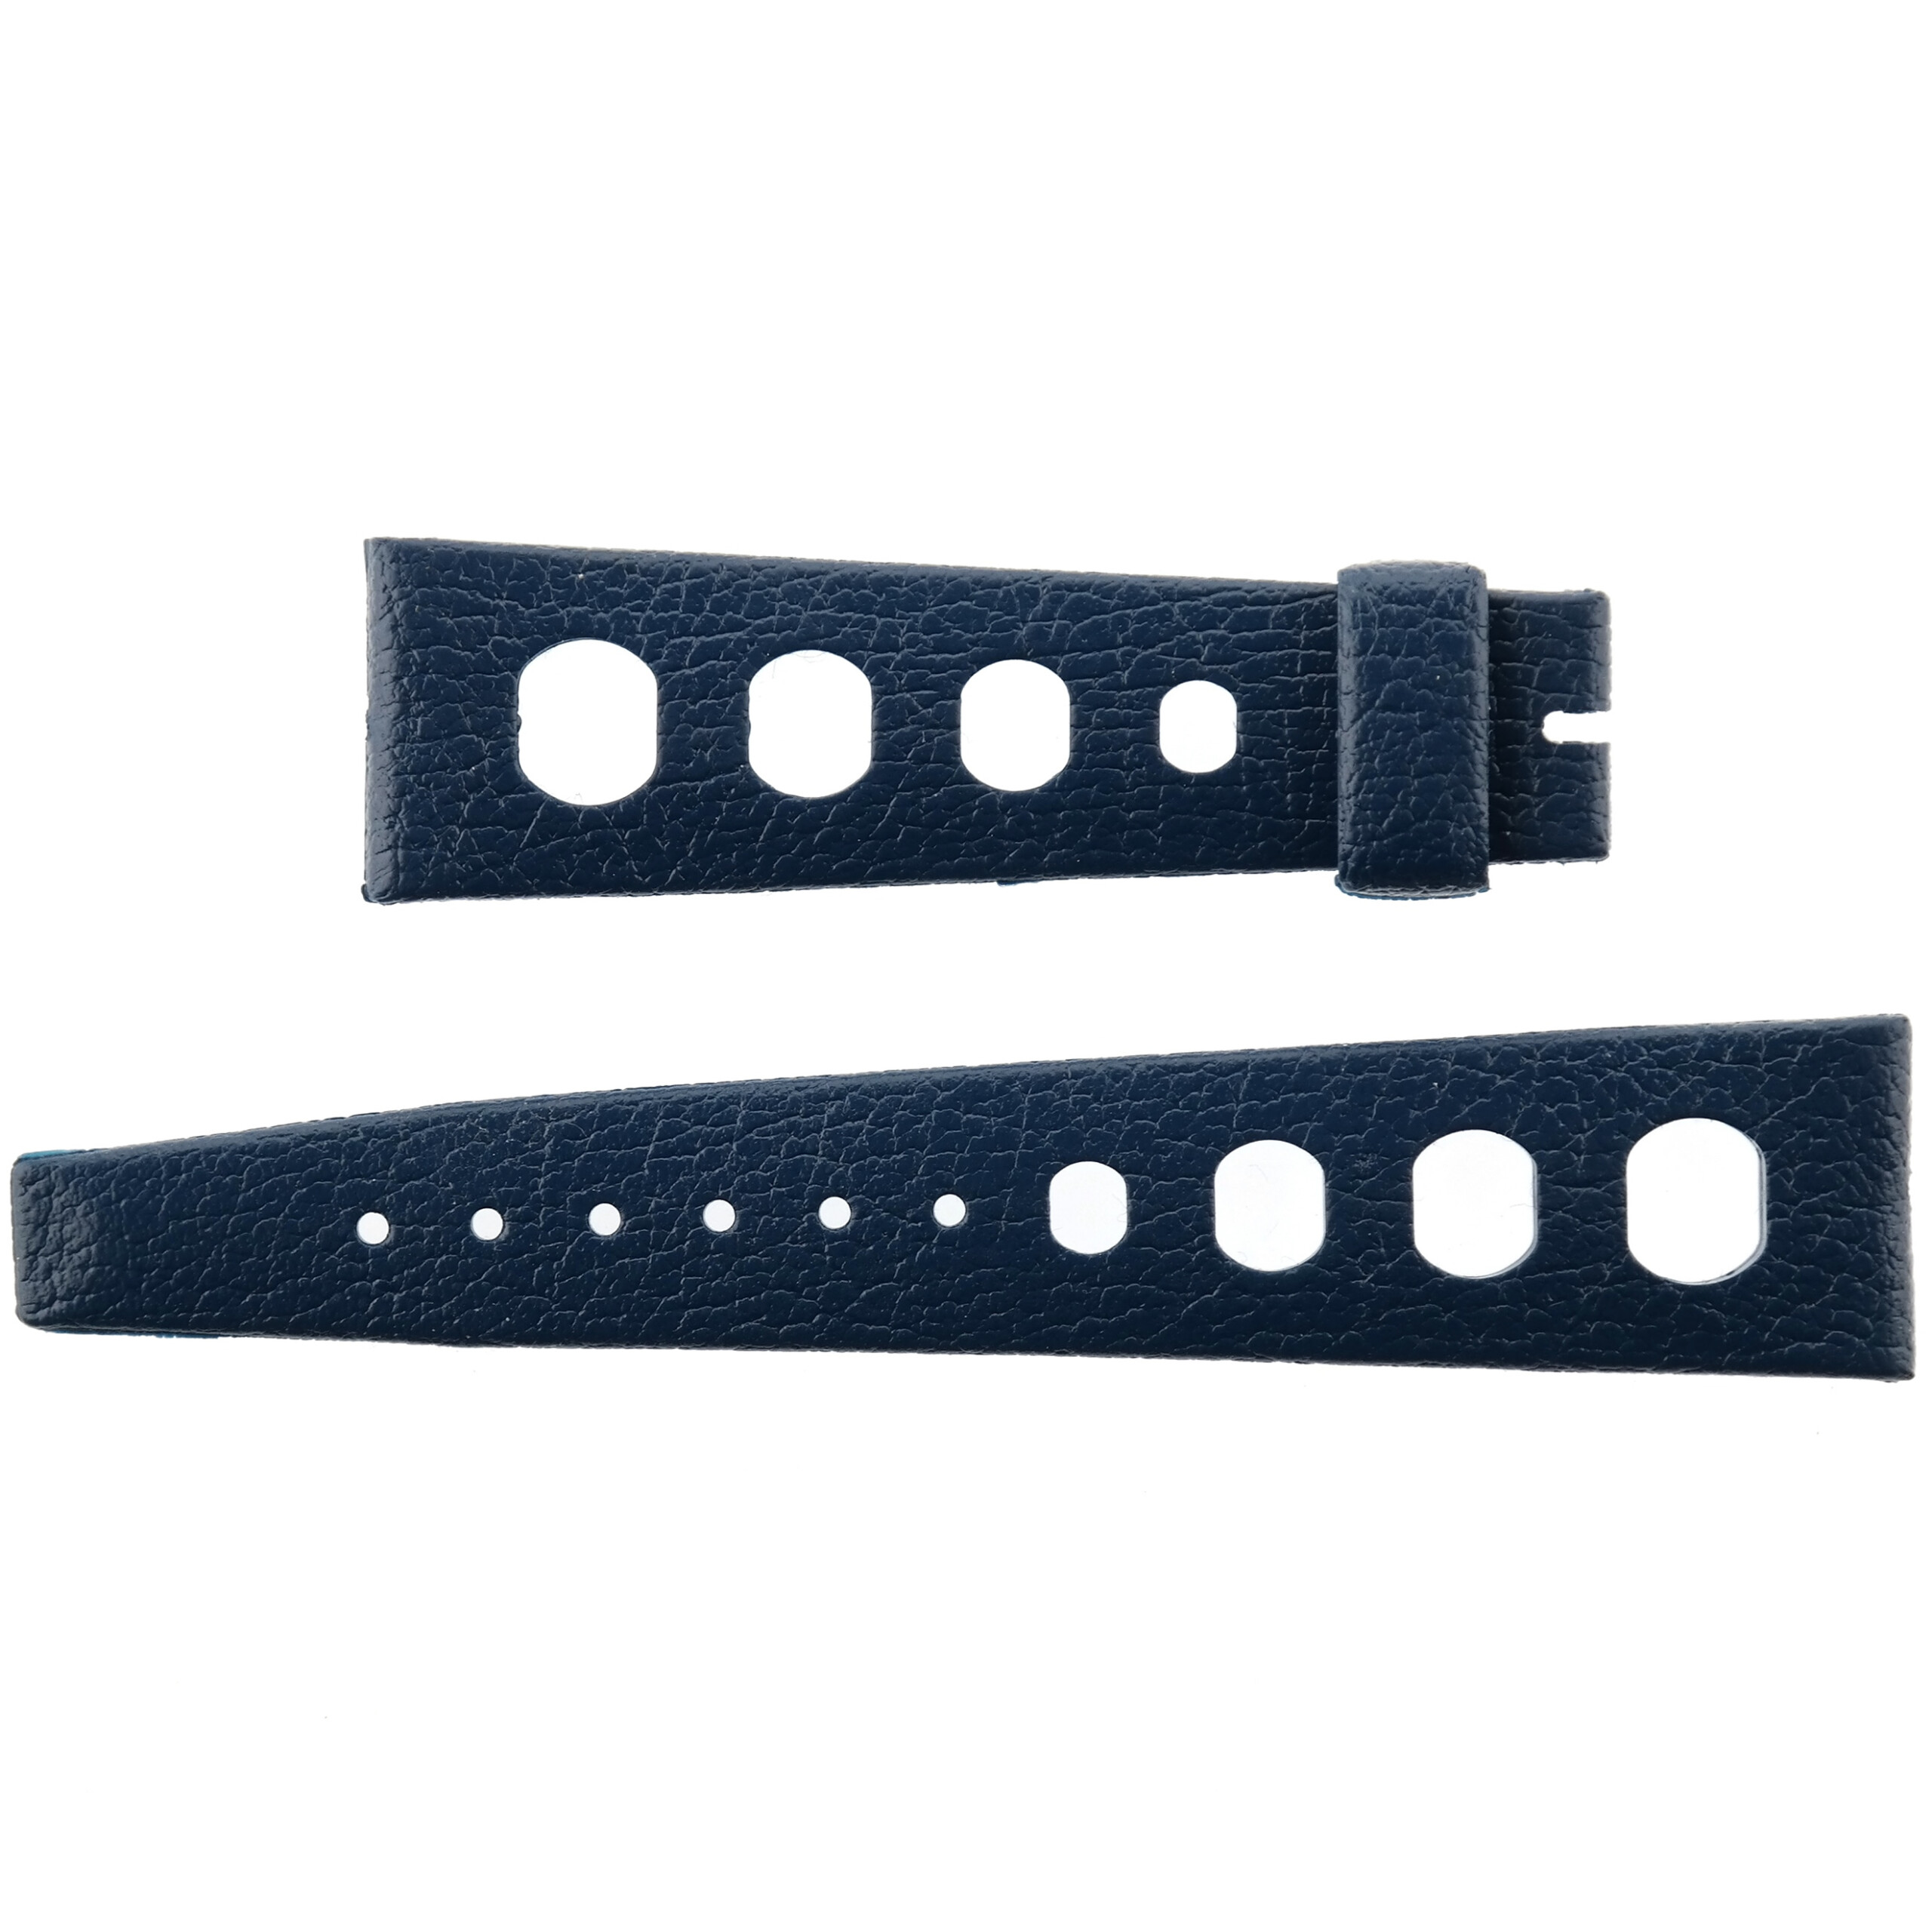 Vintage BESTFIT TROPIC SPORT Watch Strap - 23322 - 22 mm - Blue - Swiss Made